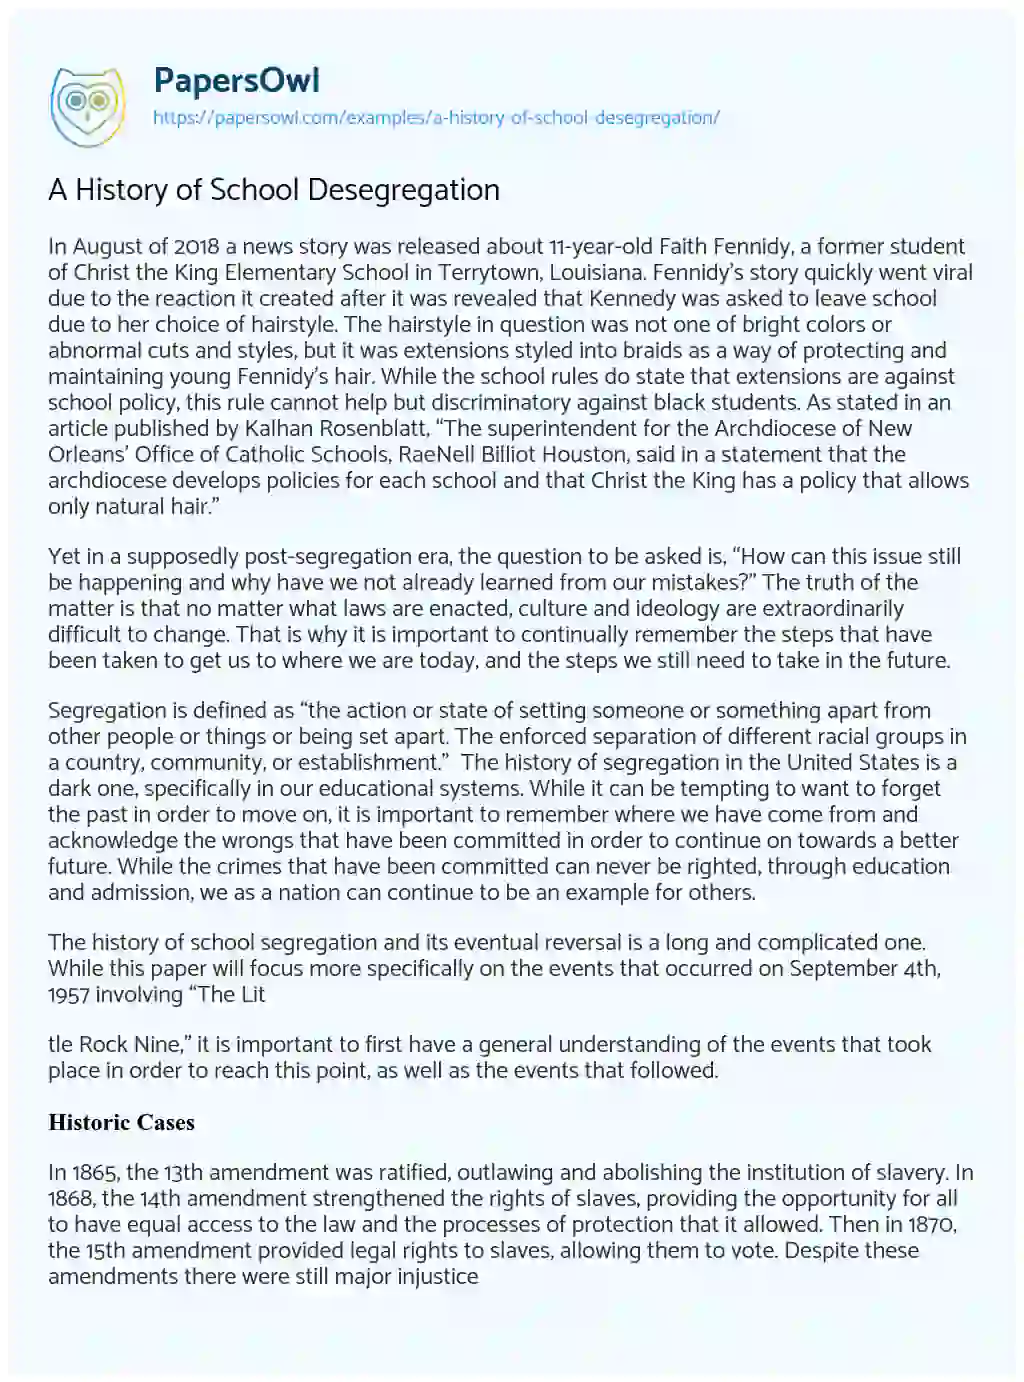 Essay on A History of School Desegregation